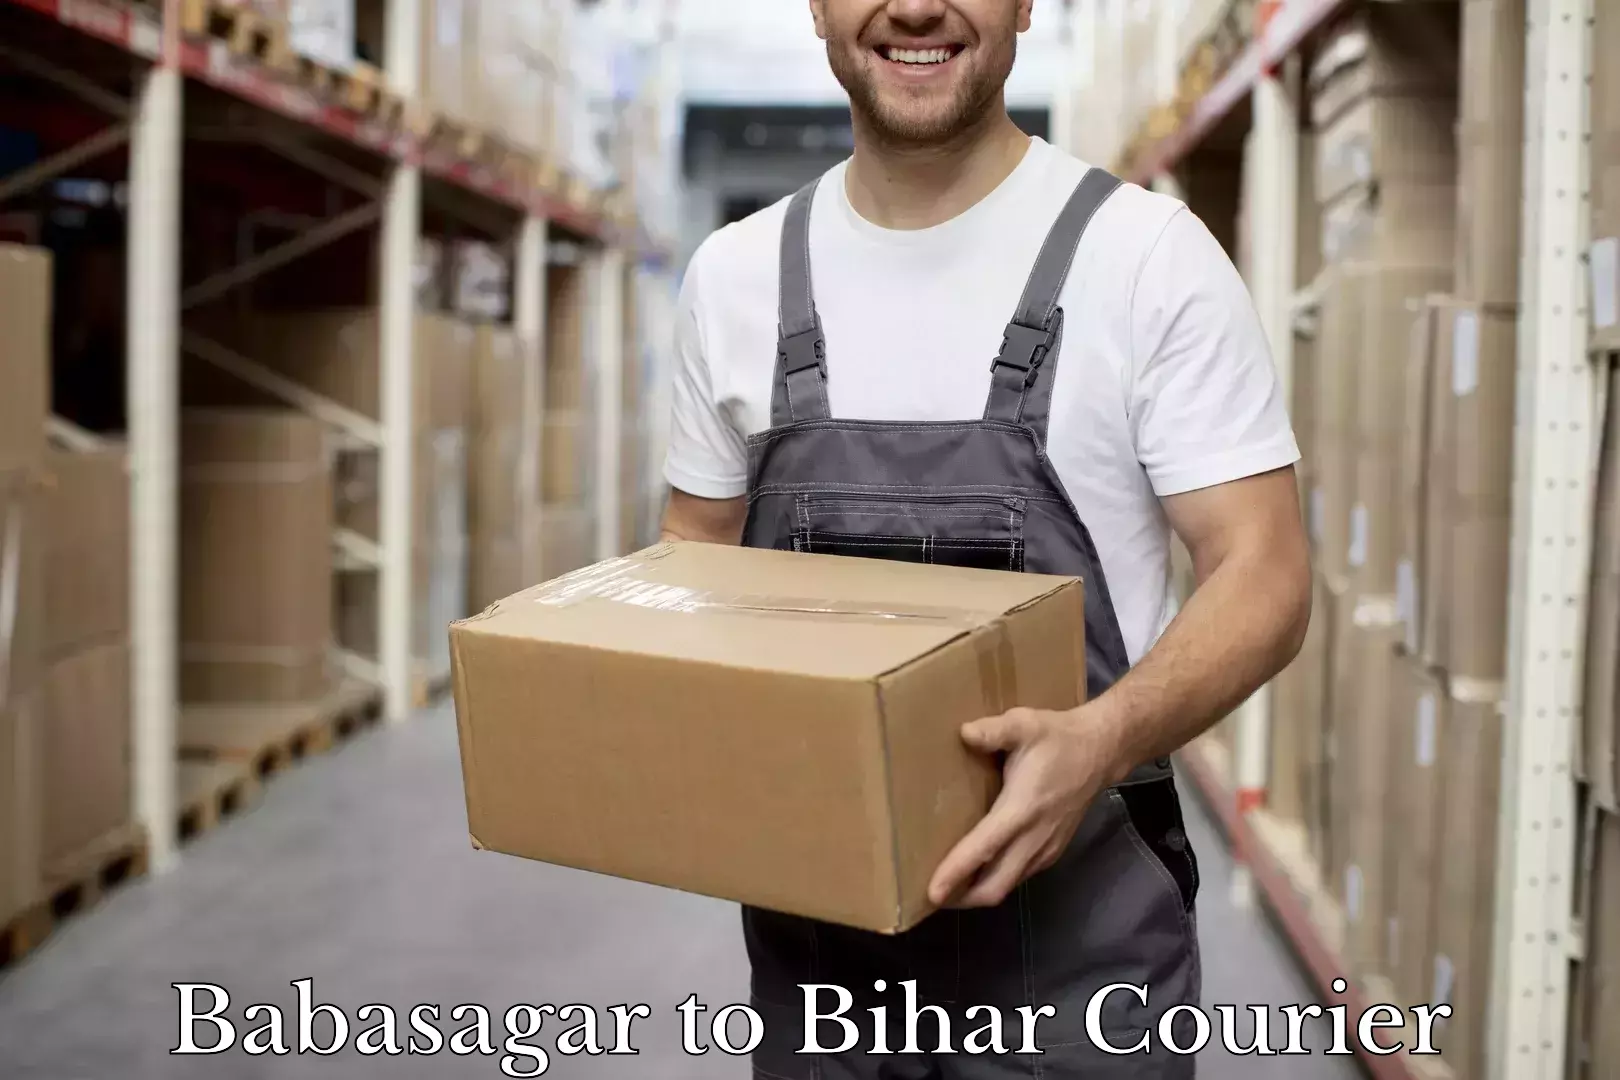 Luggage shipment specialists Babasagar to Maheshkhunt